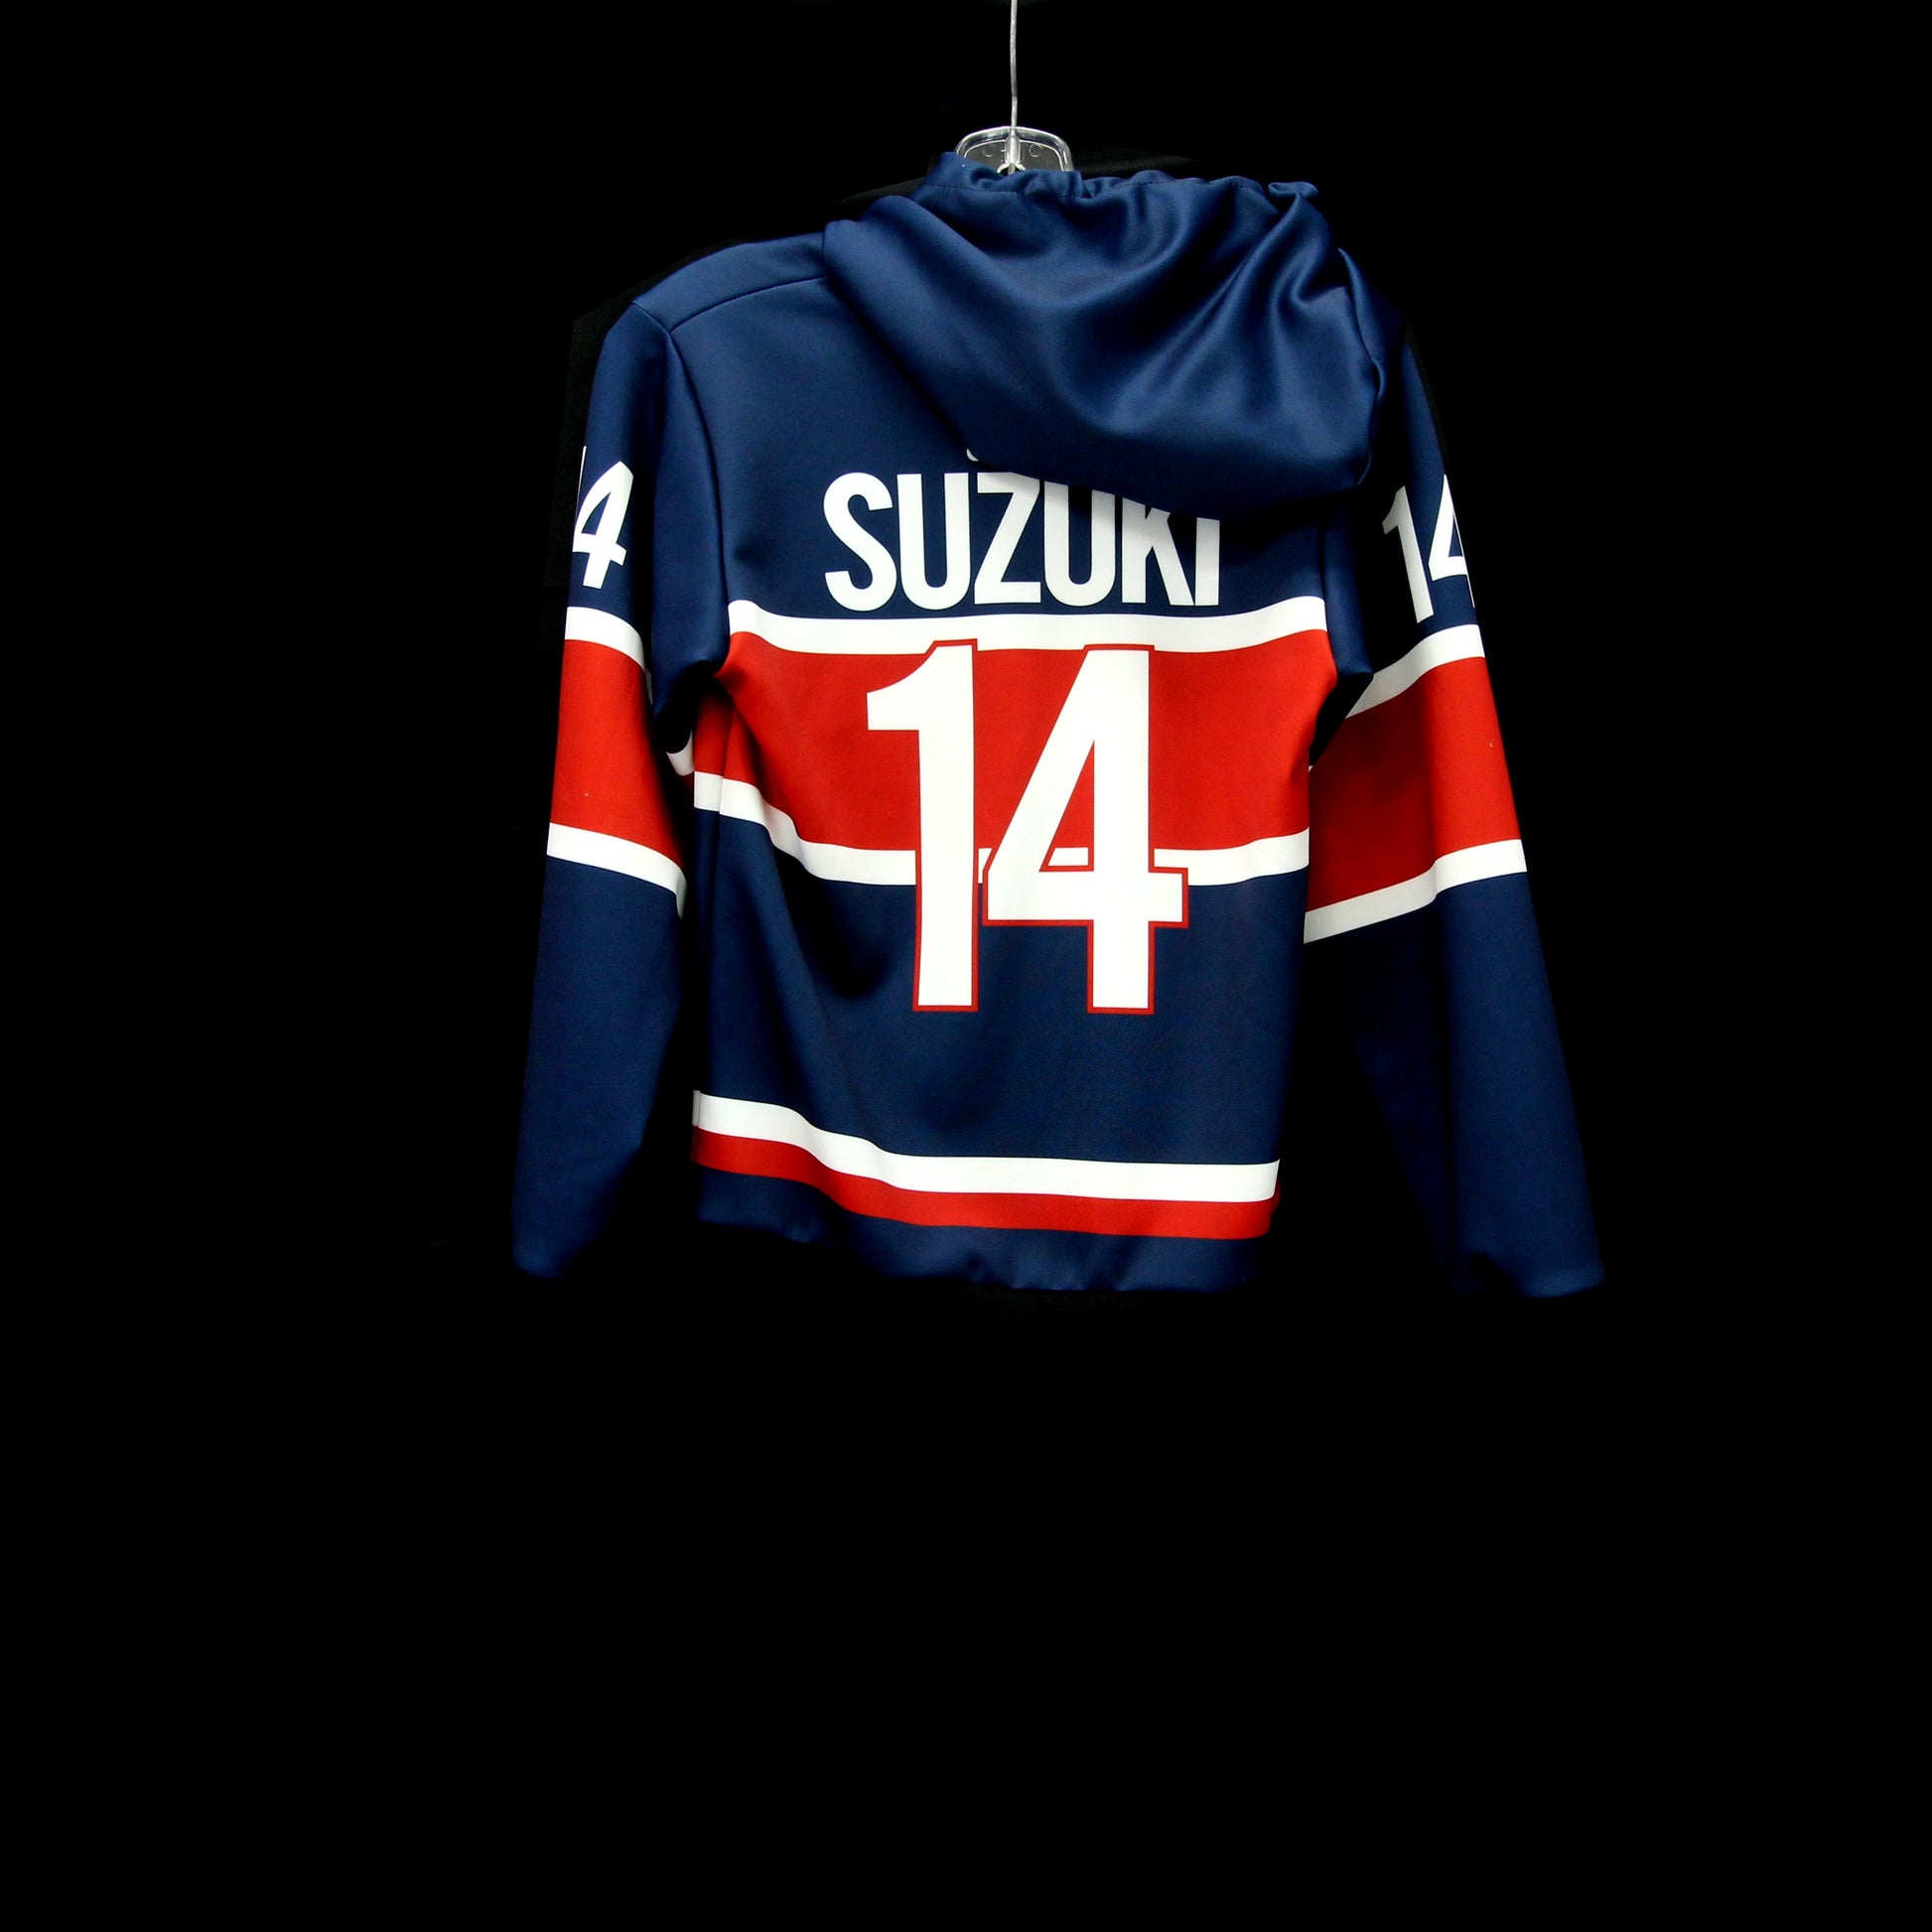 Youth Montreal Canadiens Nick Suzuki Jersey